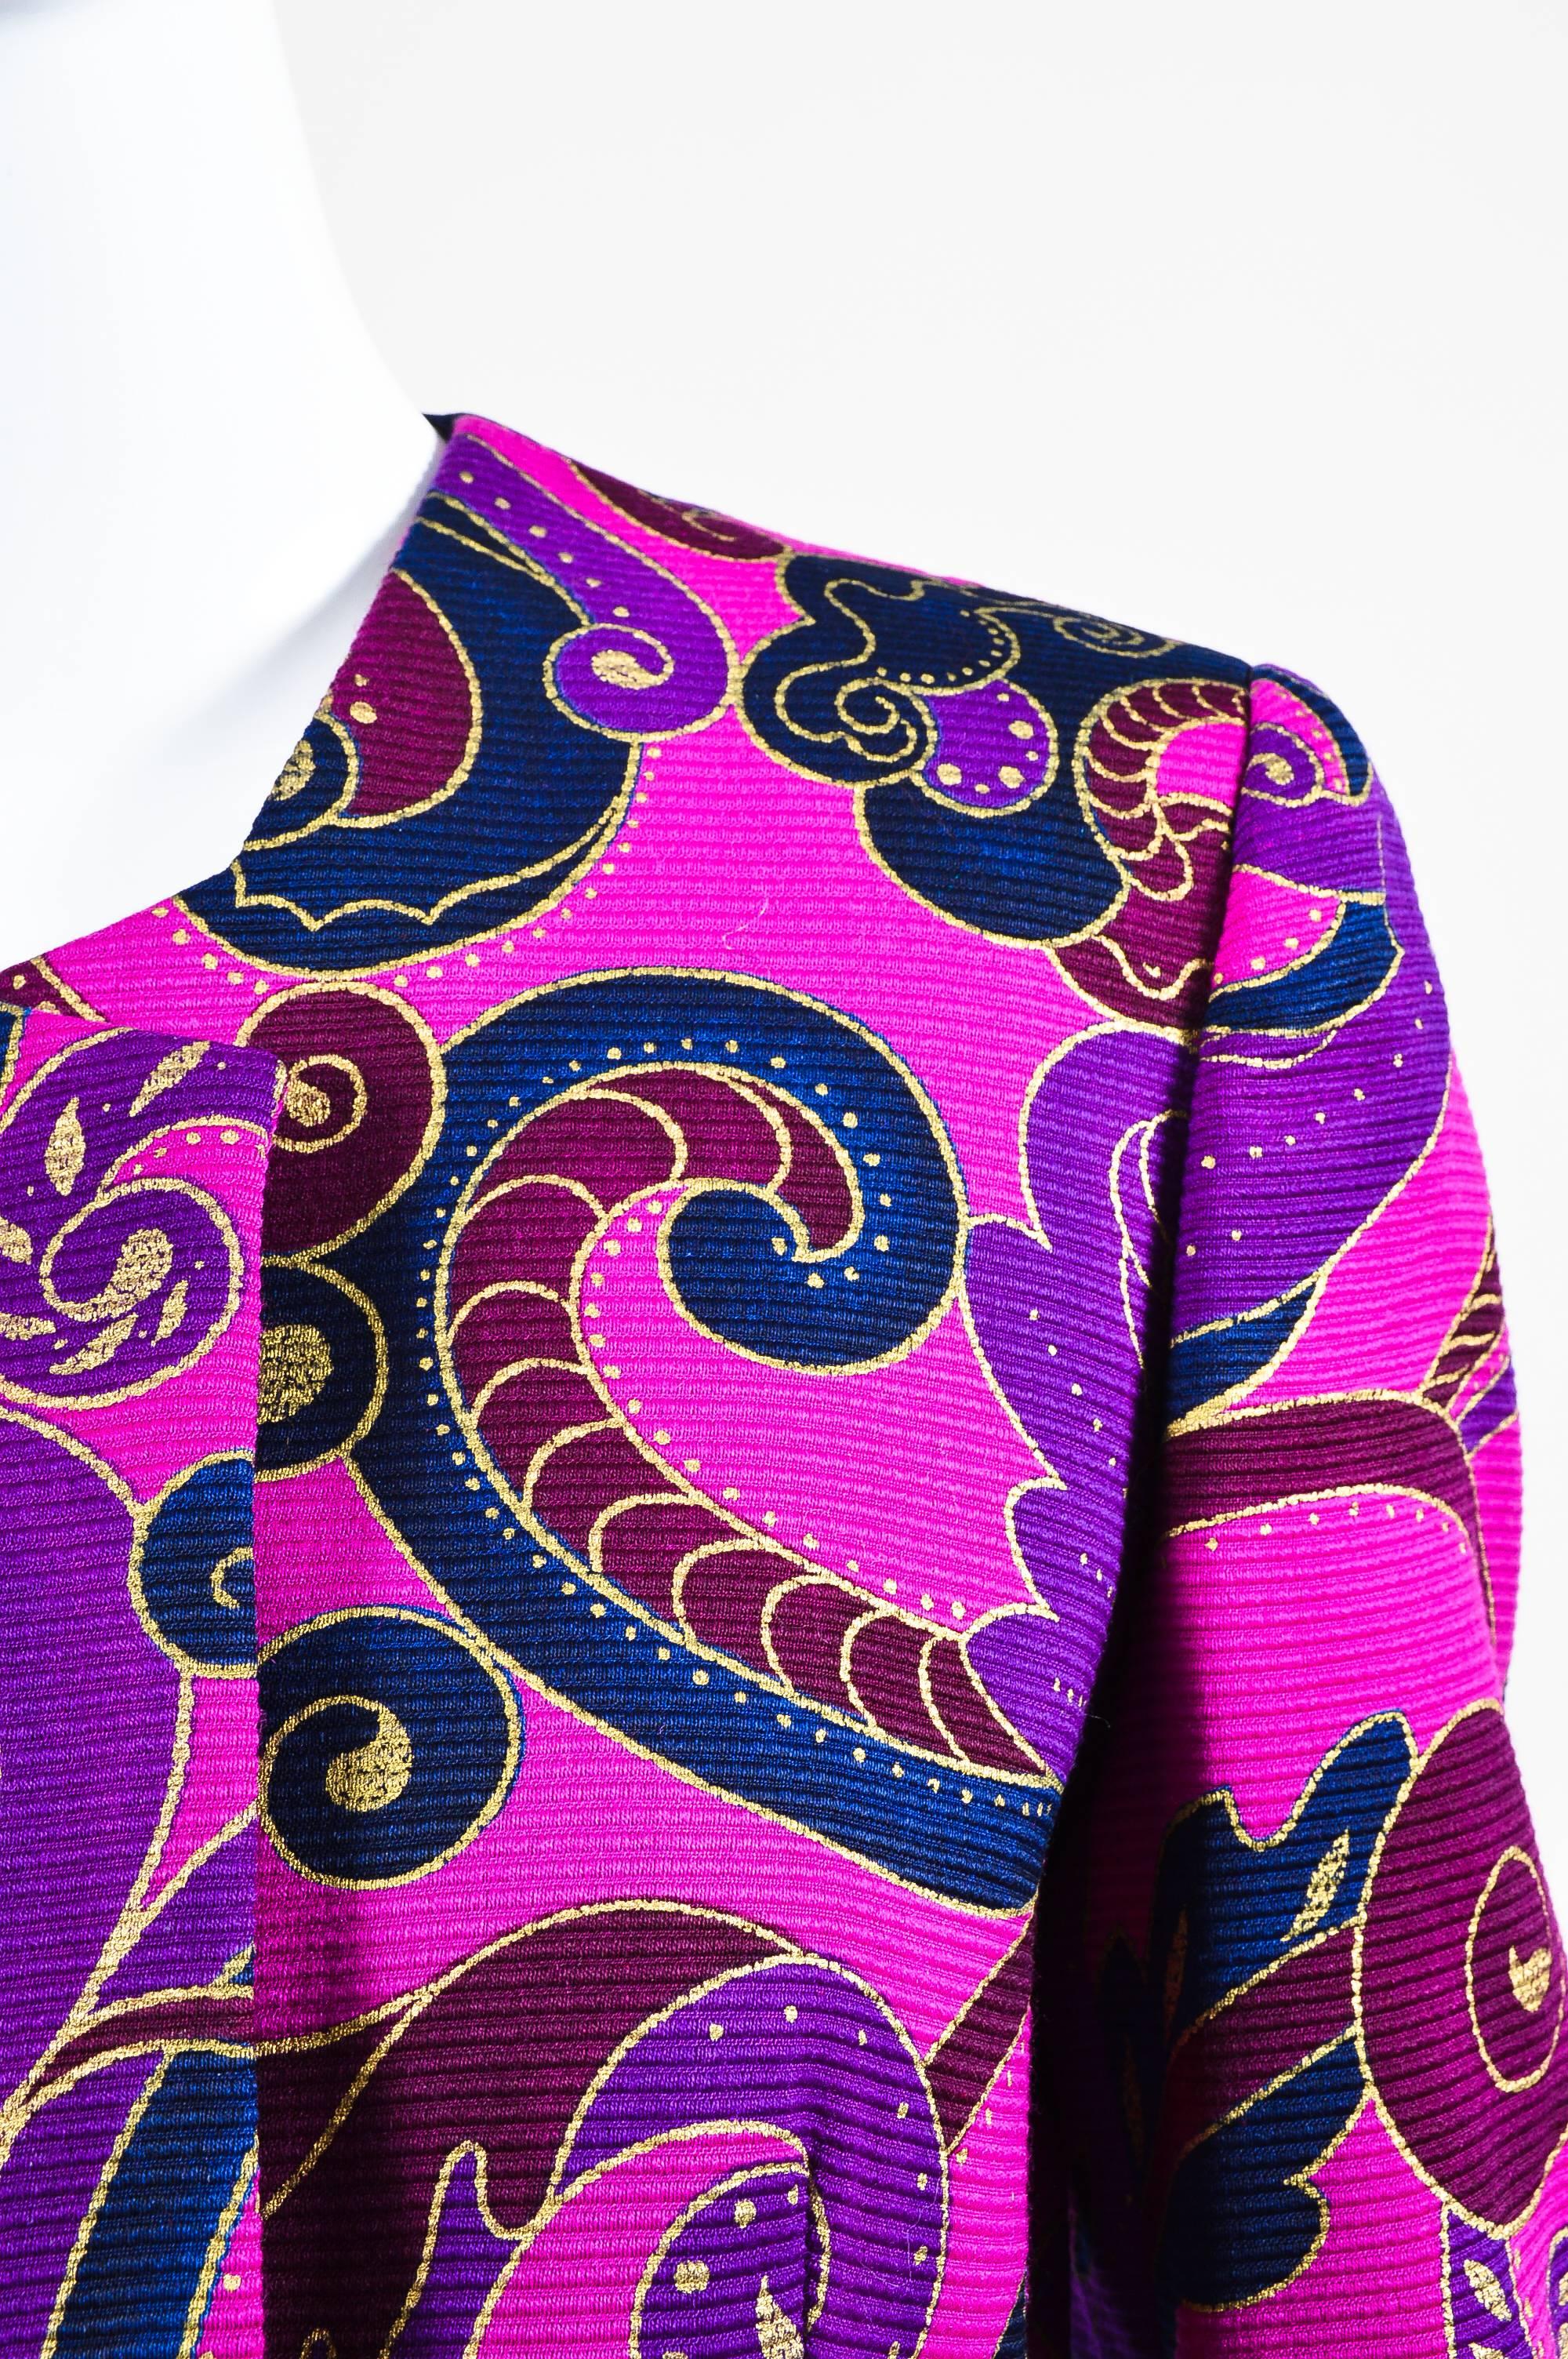 Women's Vintage Gianni Versace Purple/Fuchsia/Gold Wool Printed Jacket SZ 38